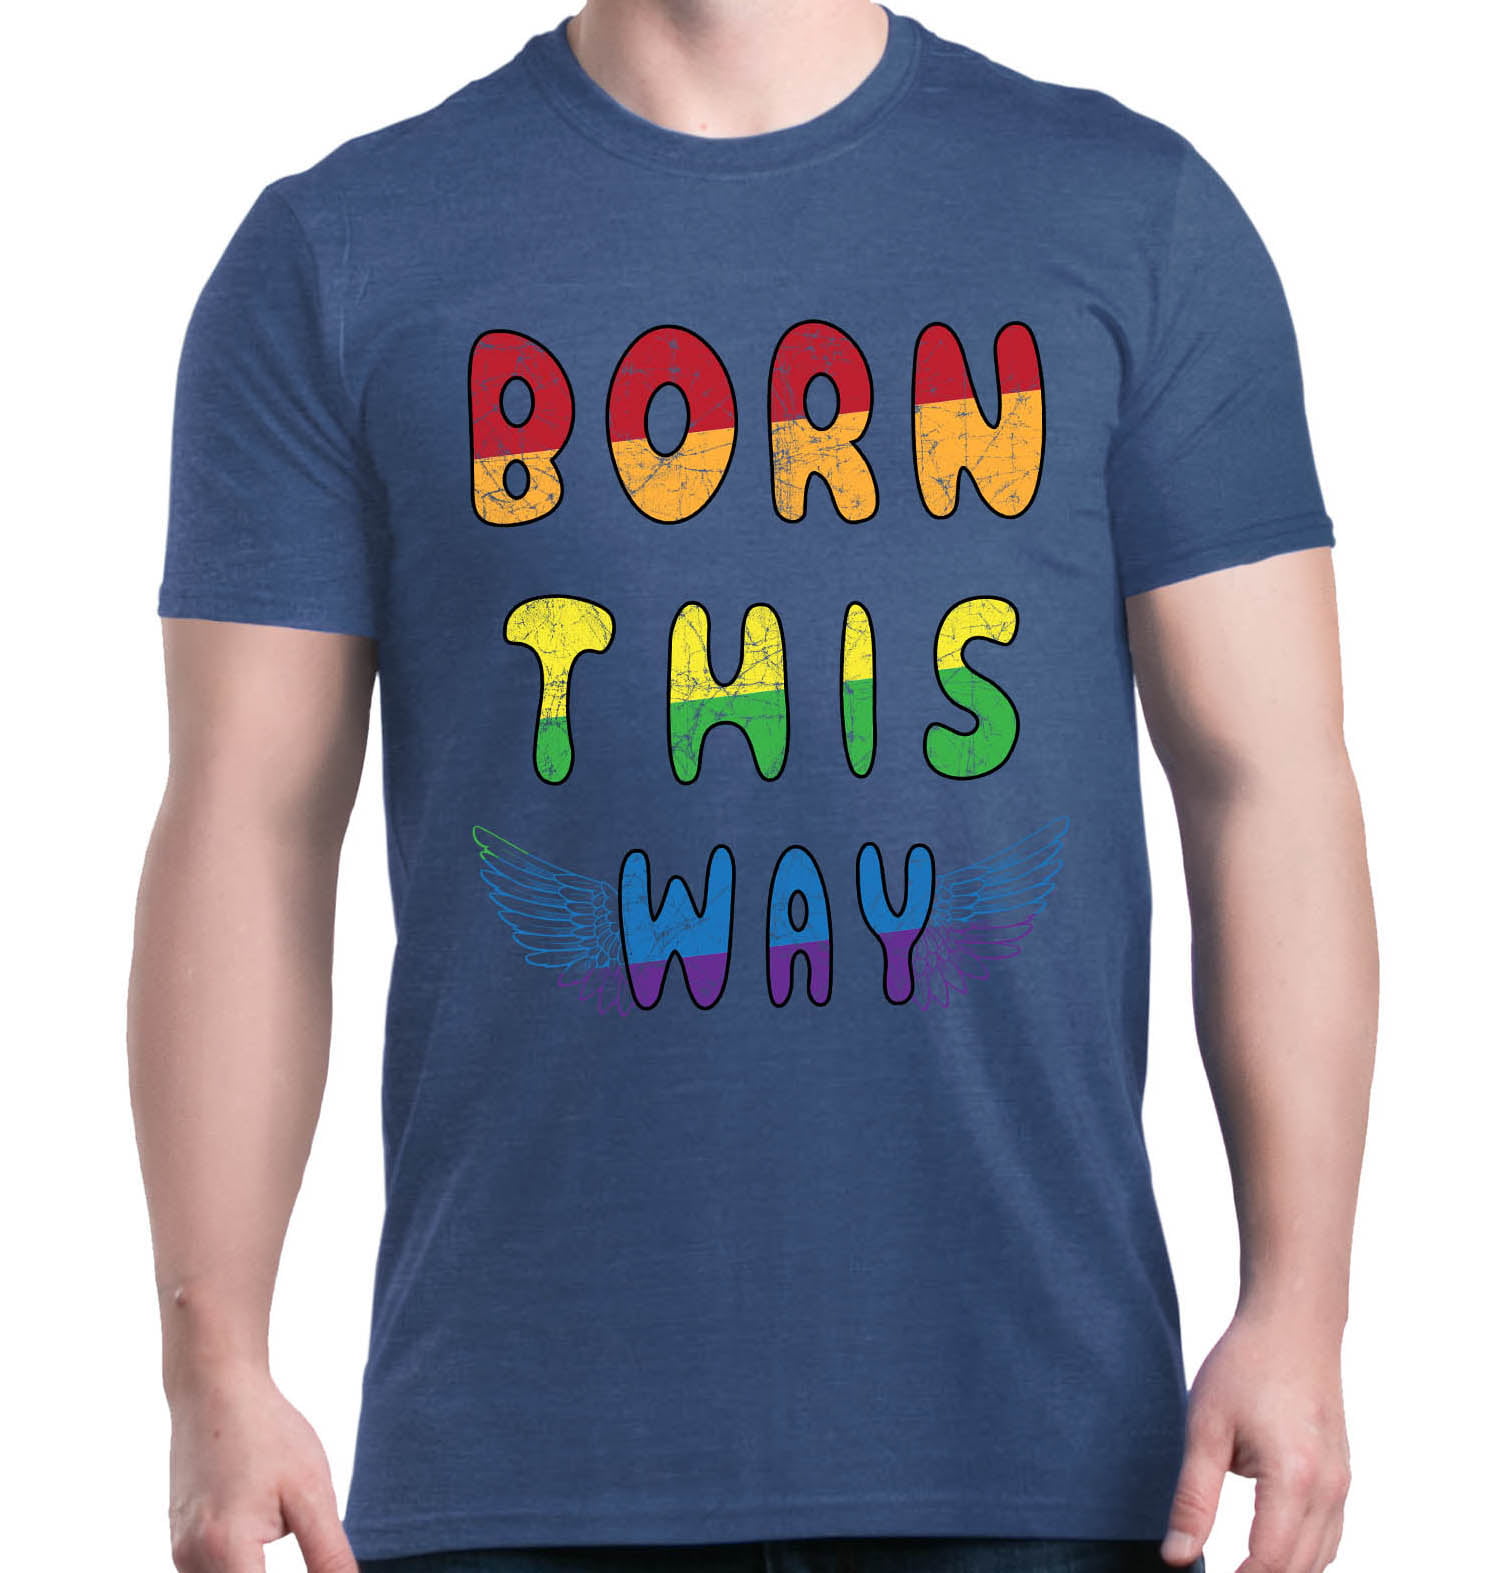 washington gay pride t shirts